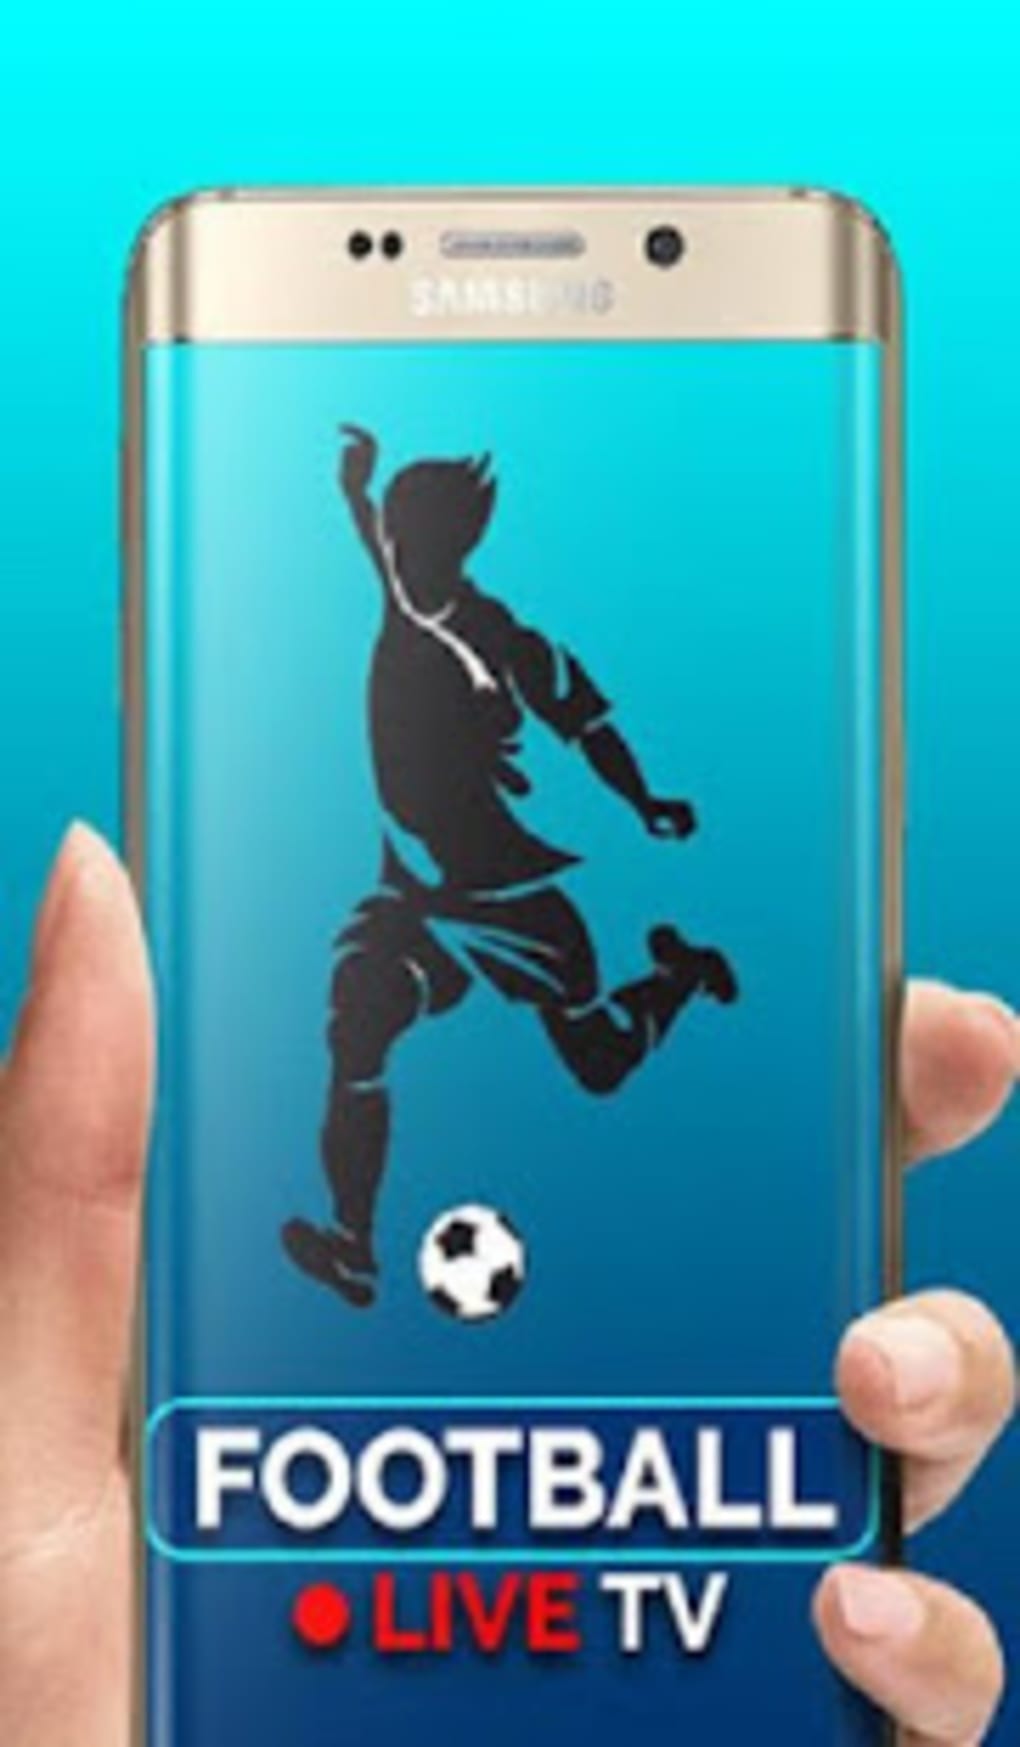 free soccer live streaming app